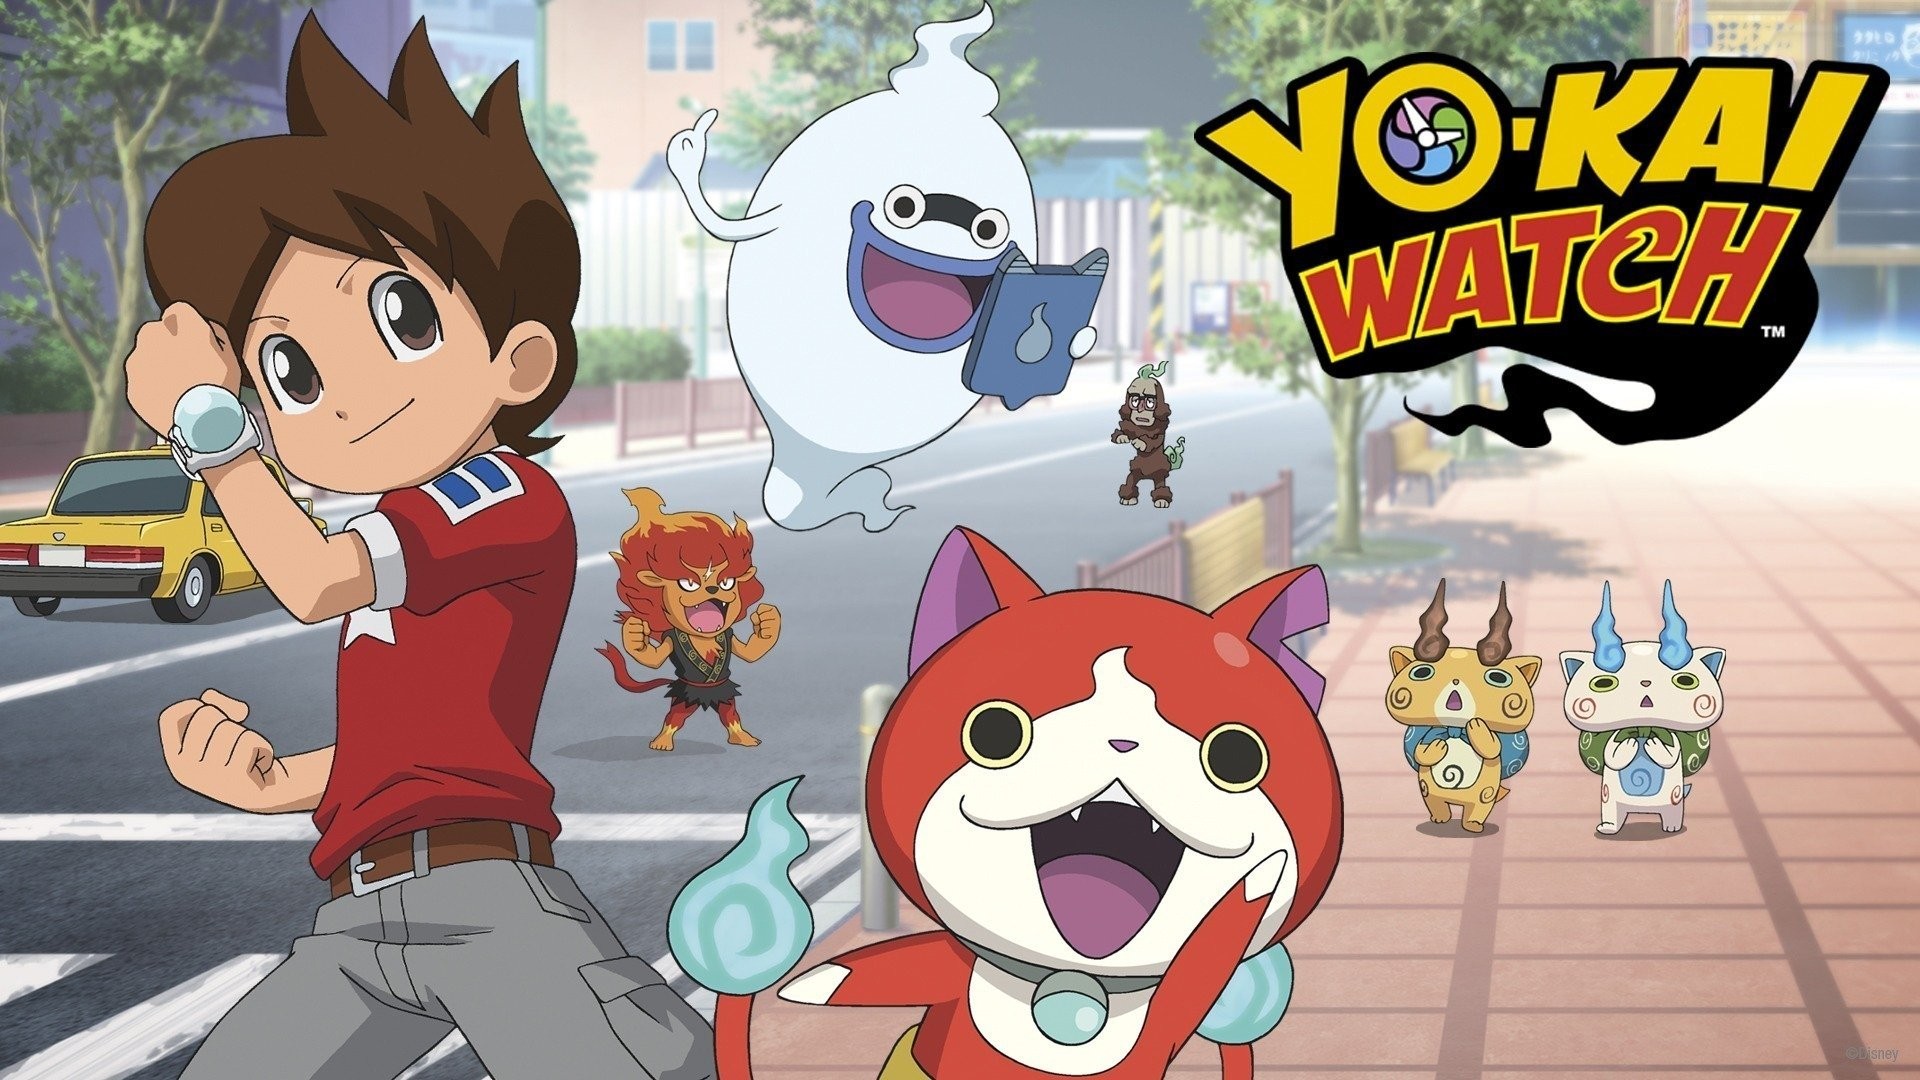 Watch Yo-kai Watch season 1 episode 26 streaming online